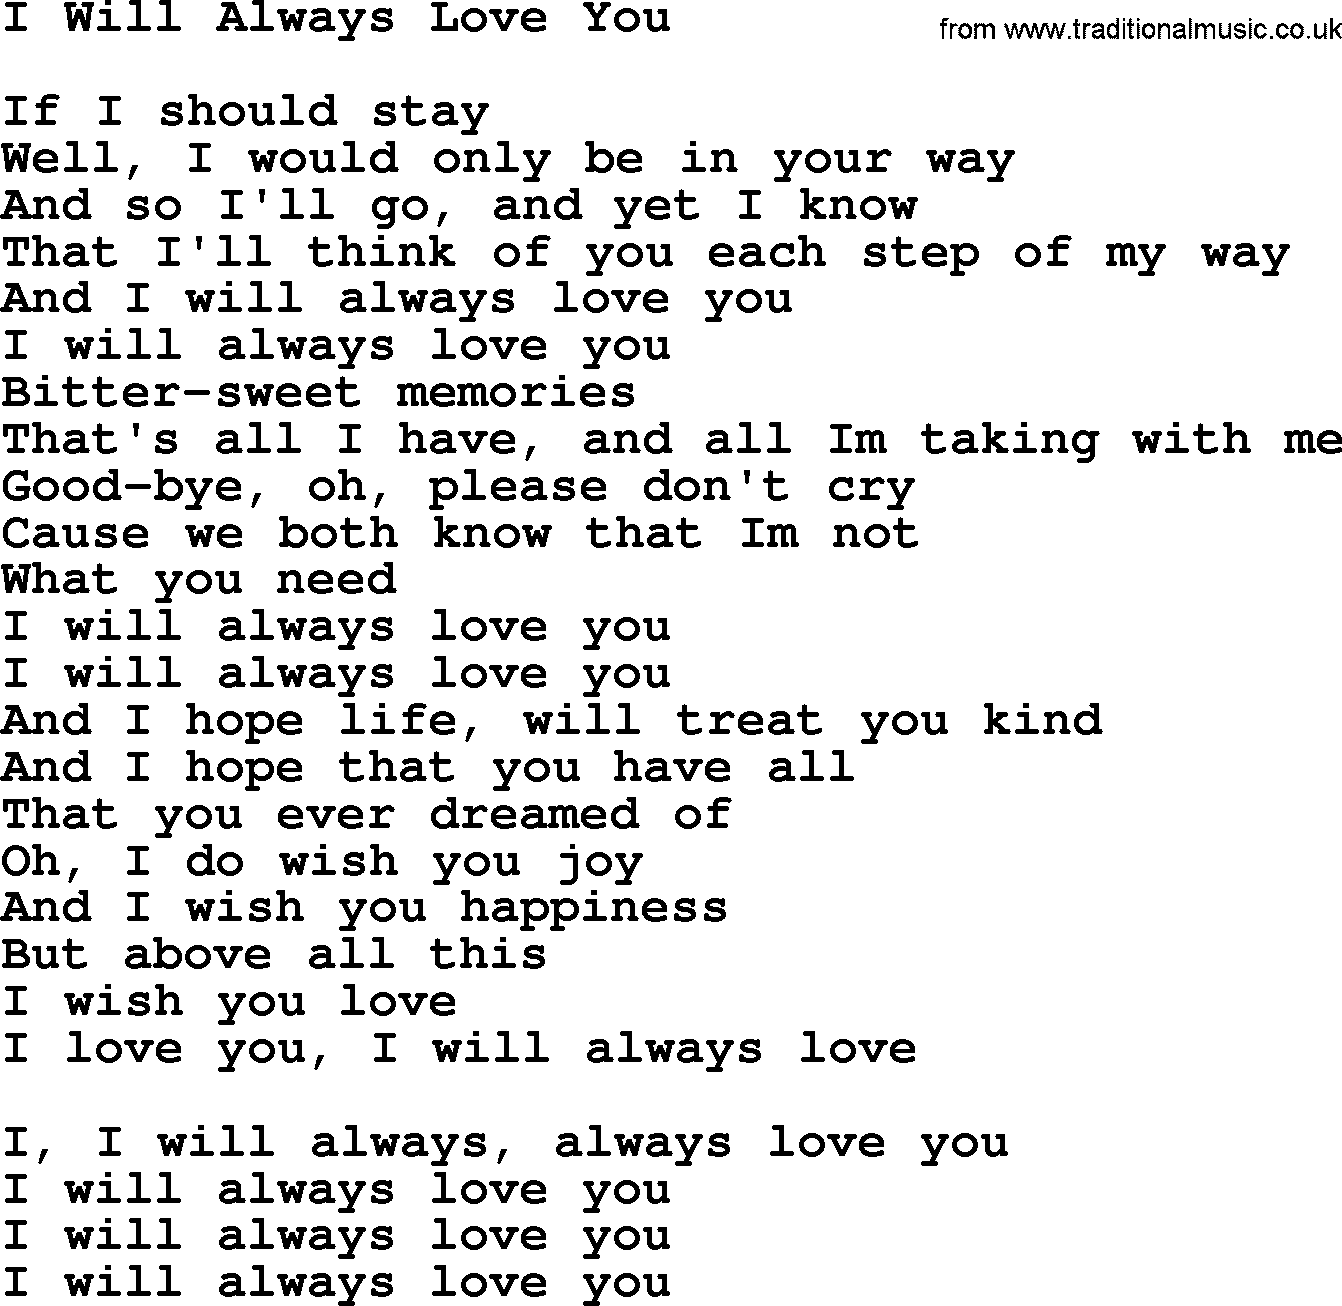 I will allways love you. 